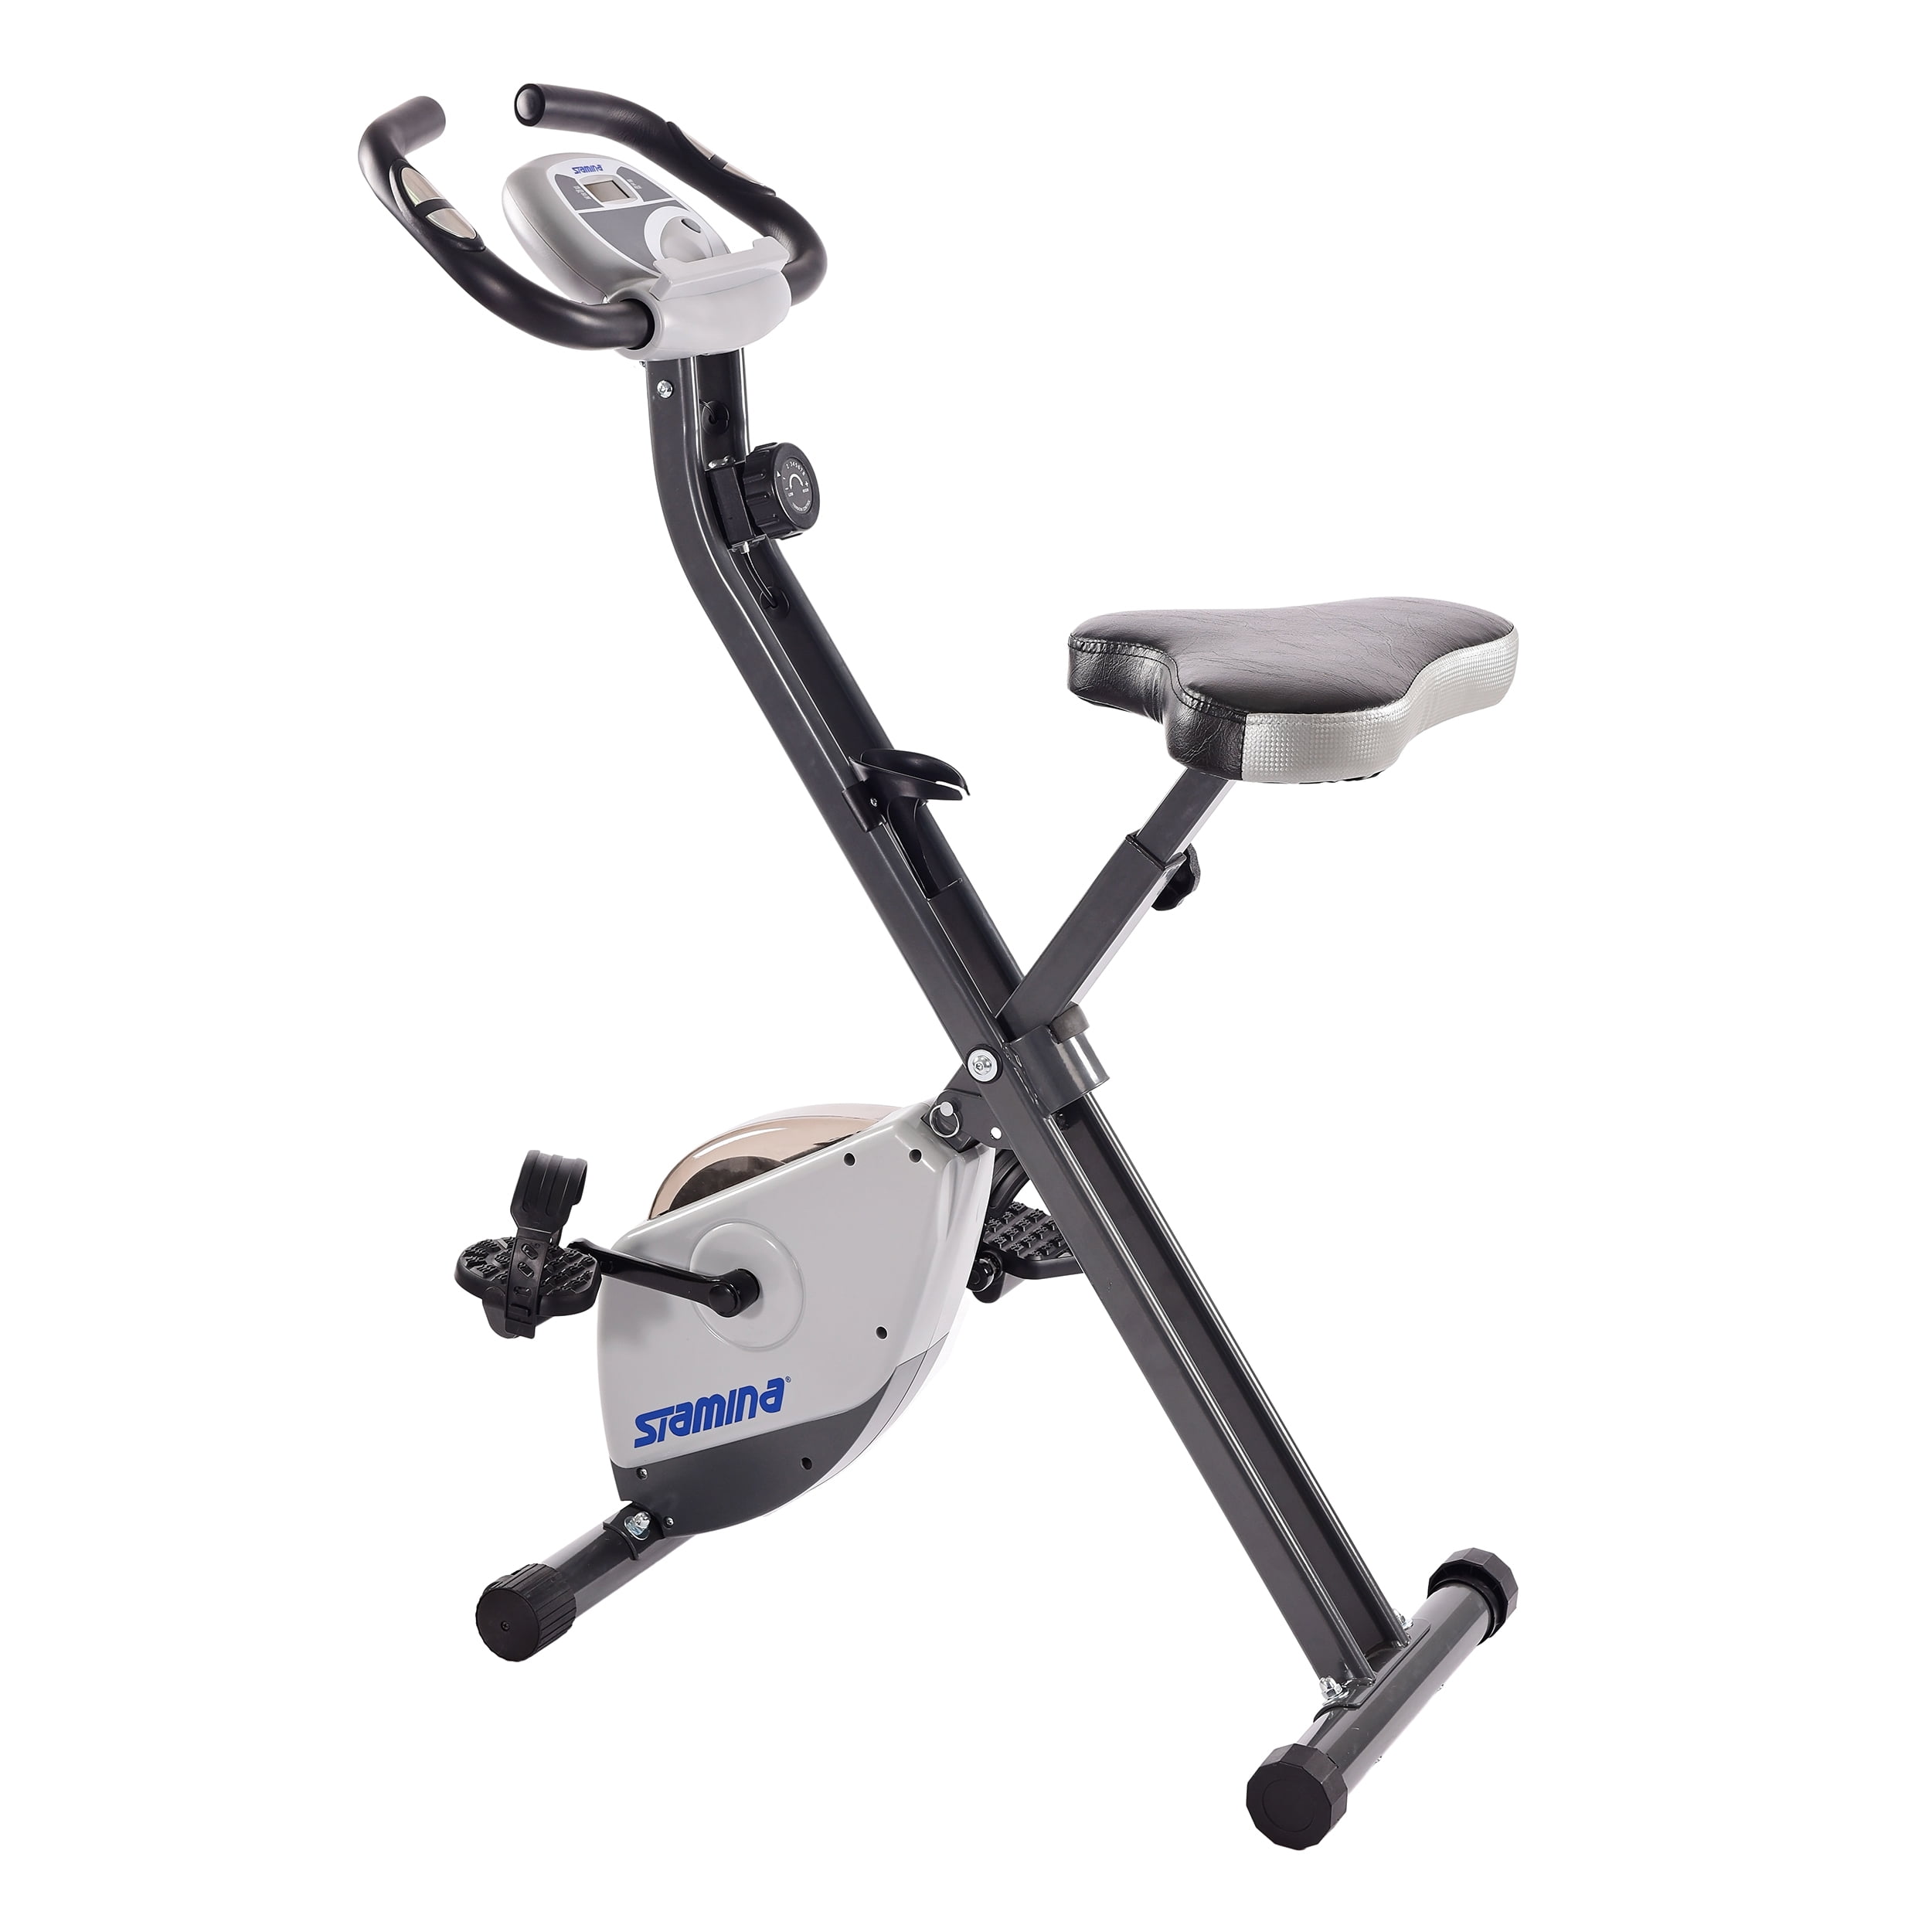 Foldable Aerobic Exercise Bike Set Cycling Trainer Fitness Cardio Equipment US ~ 